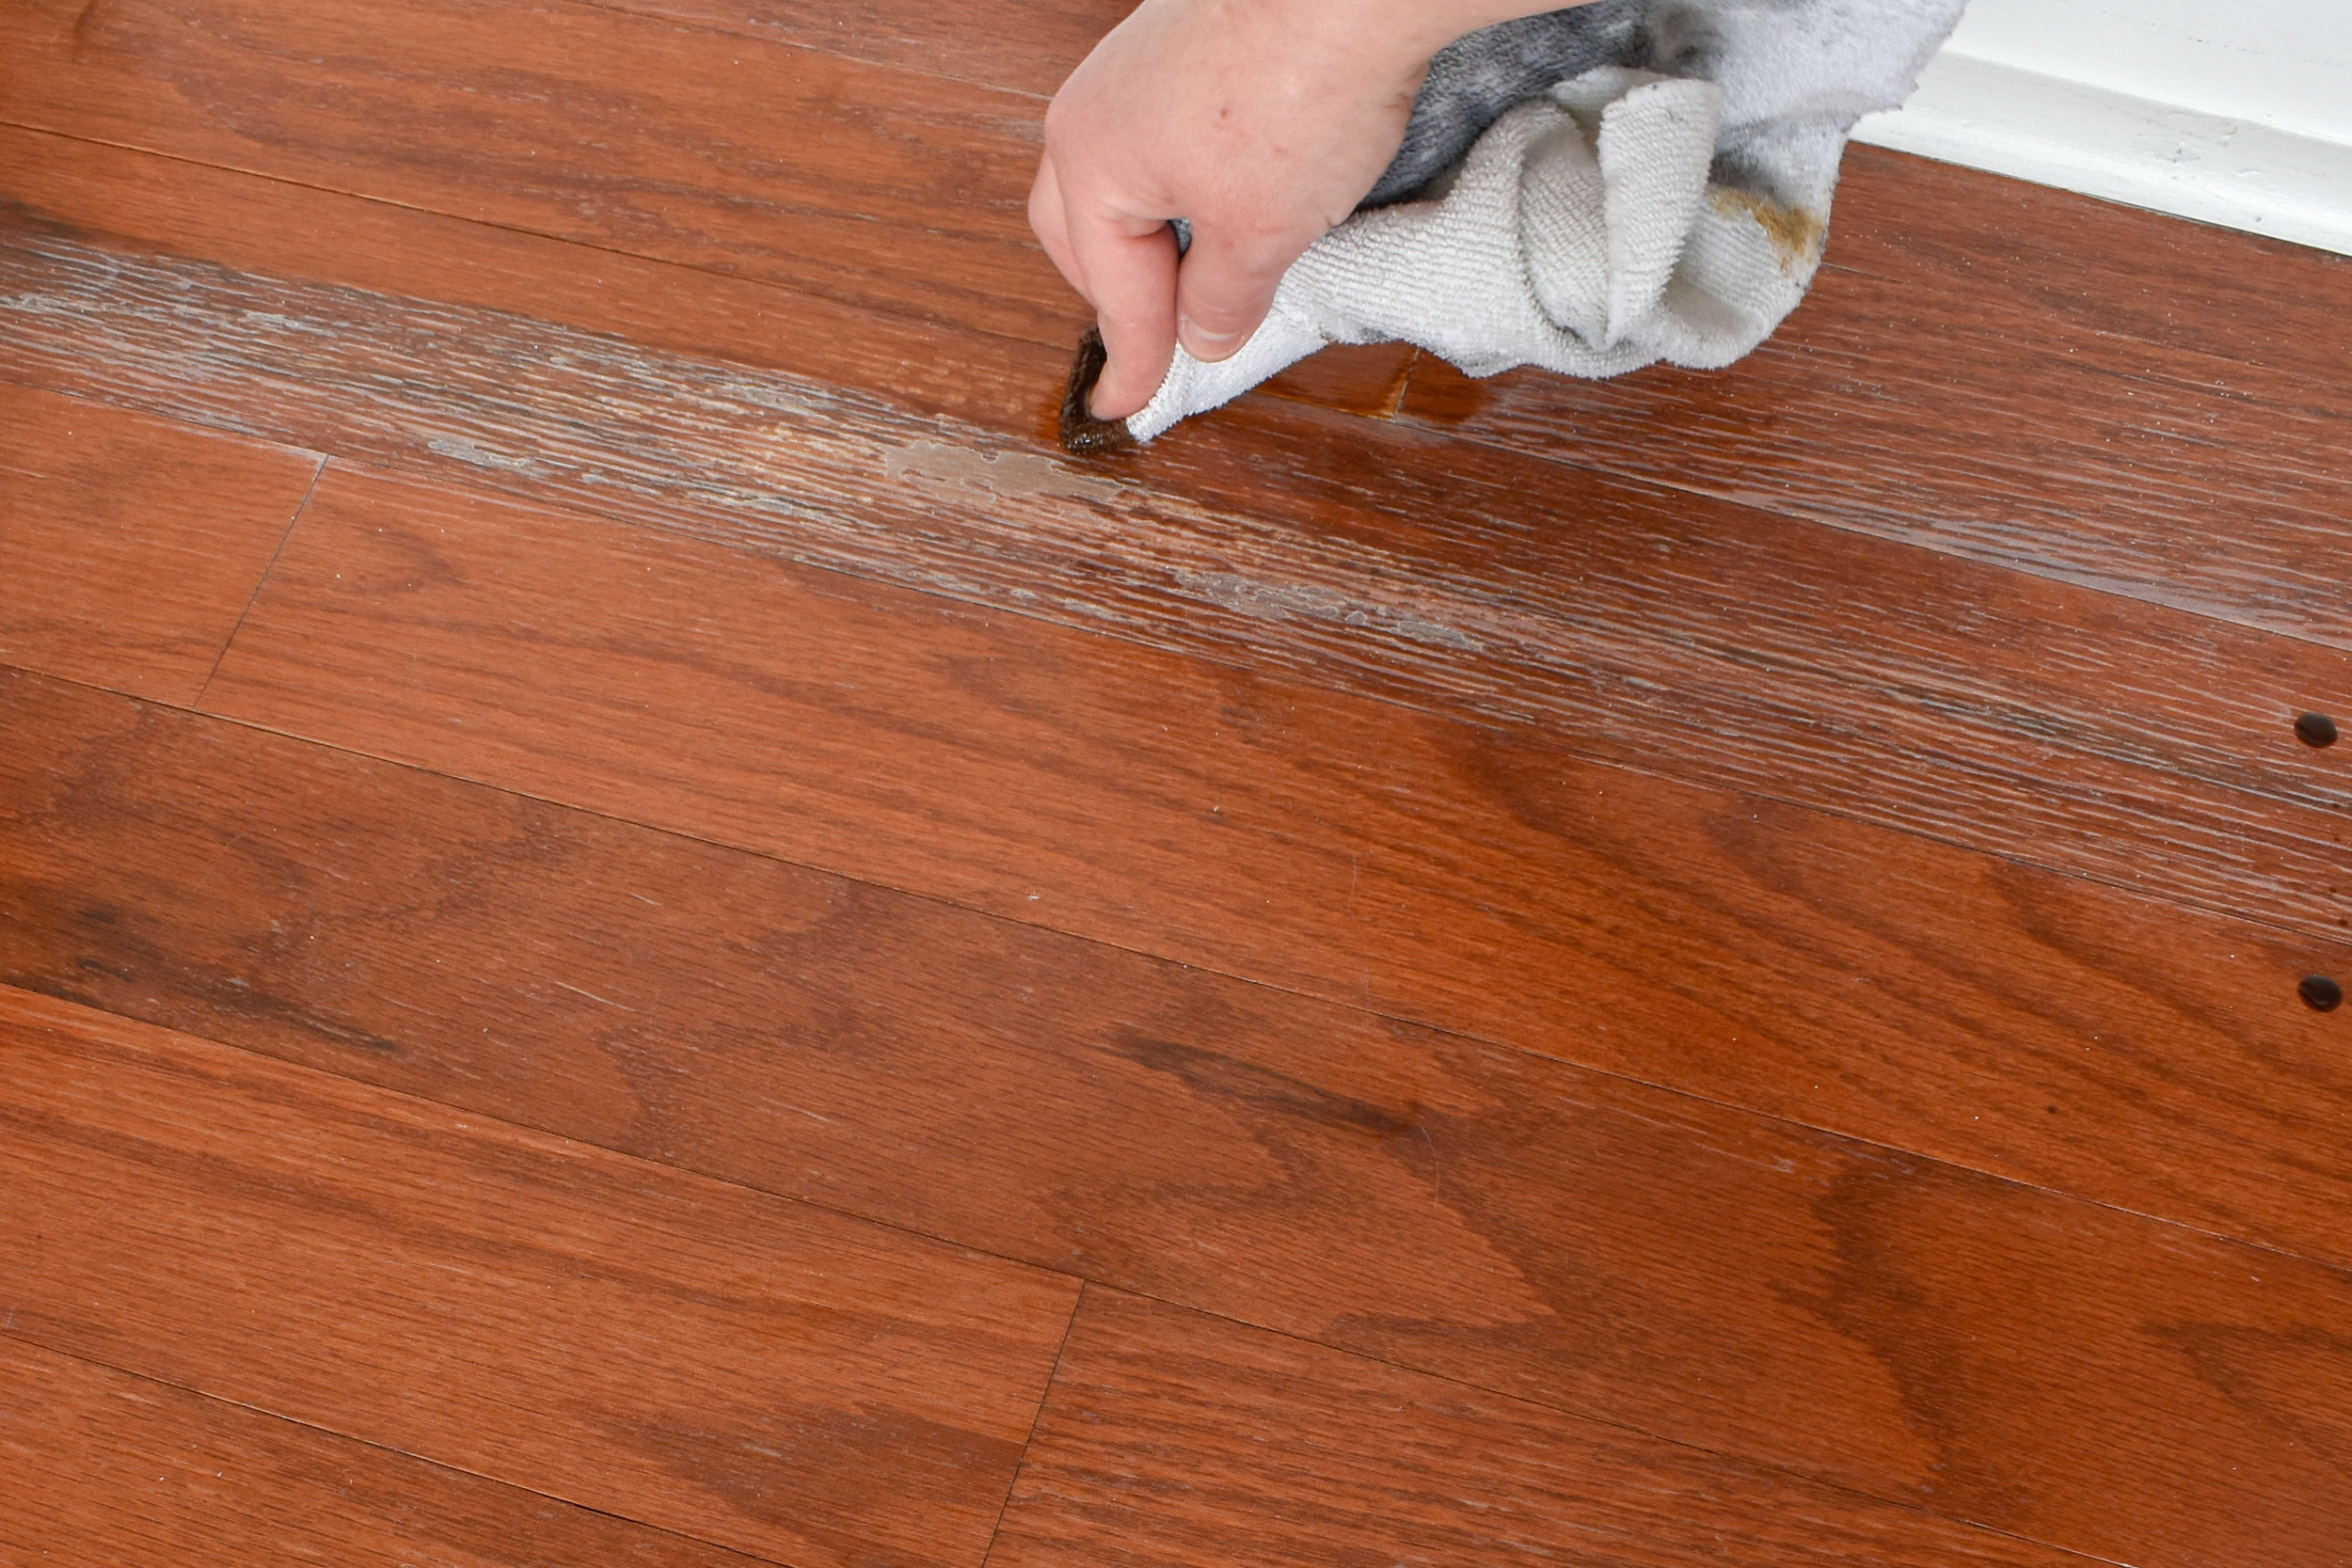 How To Make Old Hardwood Floors Shine, Prefinished Hardwood Floor Cleaner